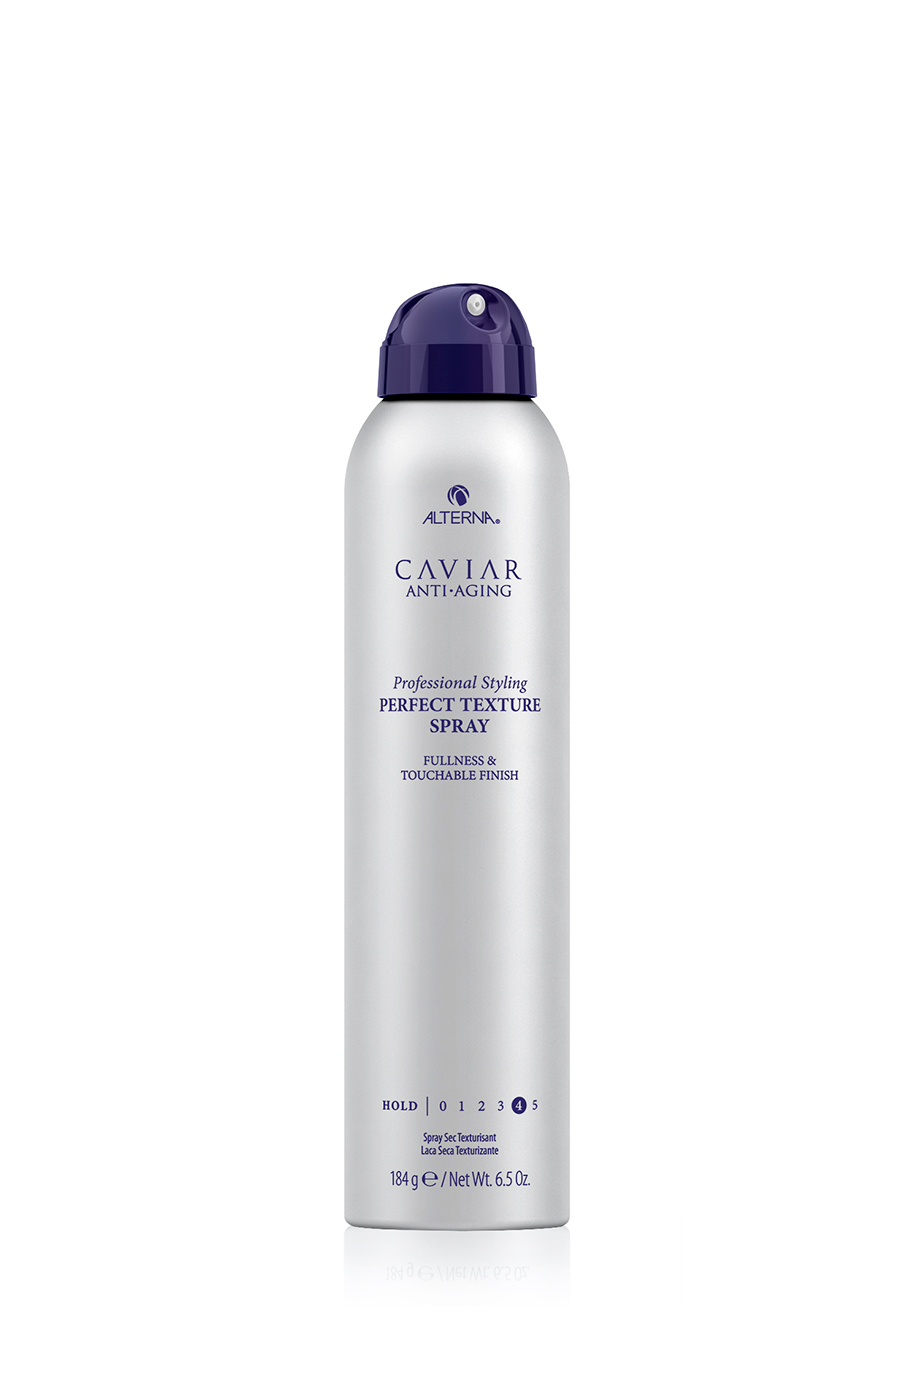 Alterna Caviar Anti-Aging Professional Styling Perfect Texture Spray